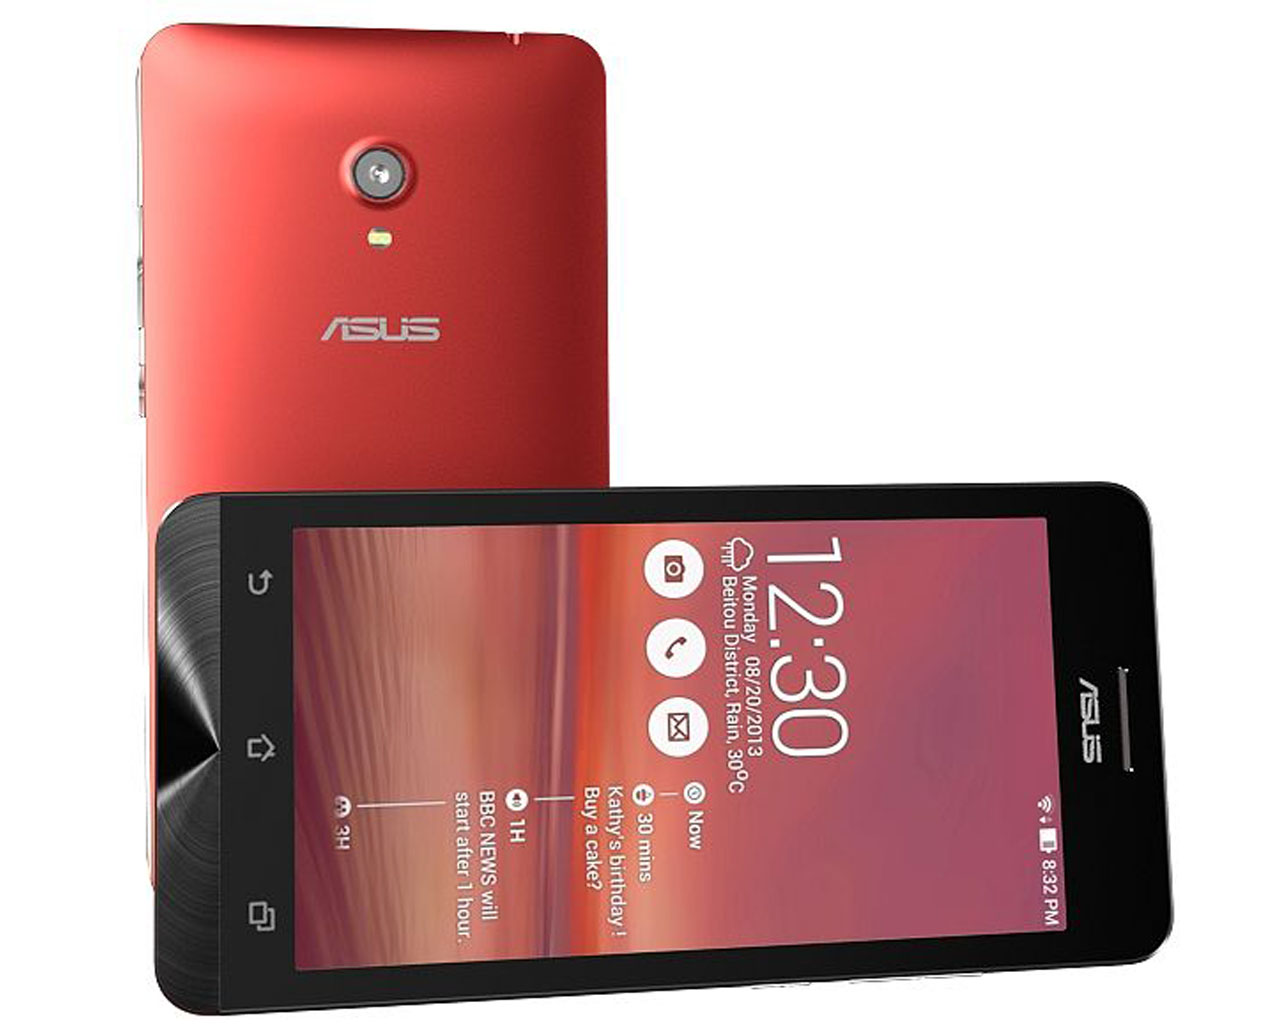 Asus Zenfone 6 A600CG Smartphone Review - NotebookCheck